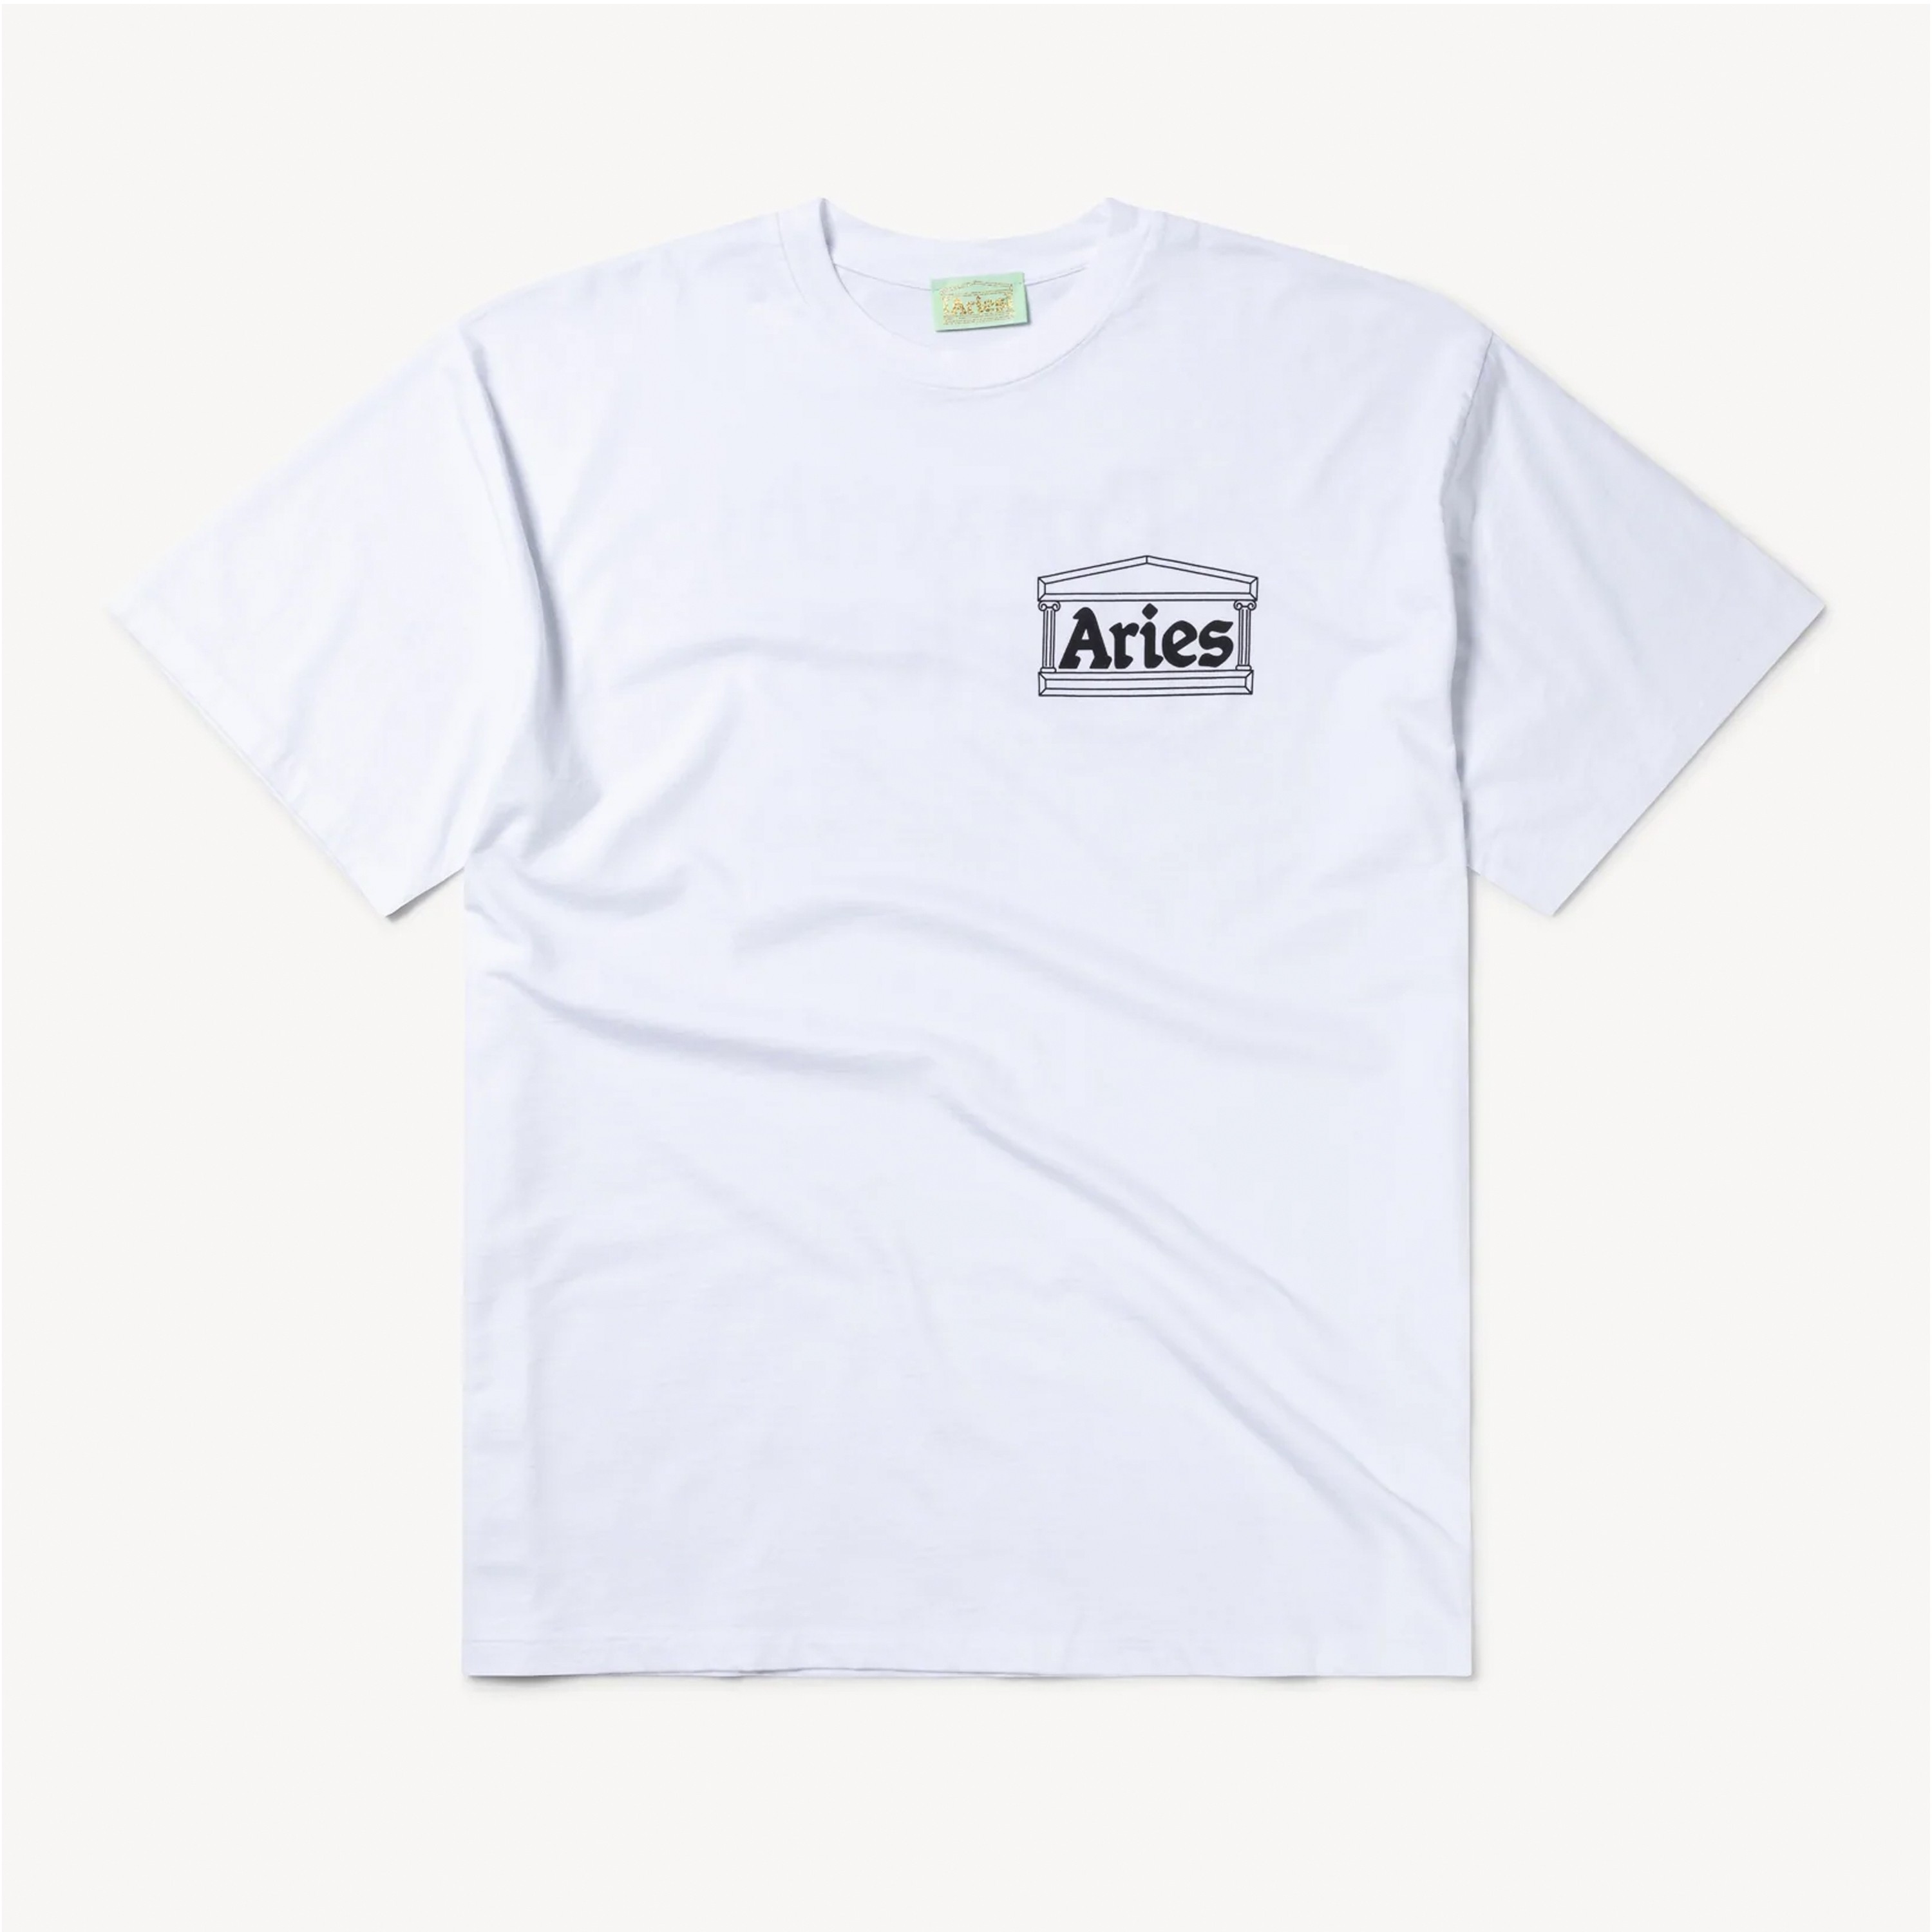 Aries I'm With Aries T-Shirt (White) - FTAR60013-WHT - Consortium